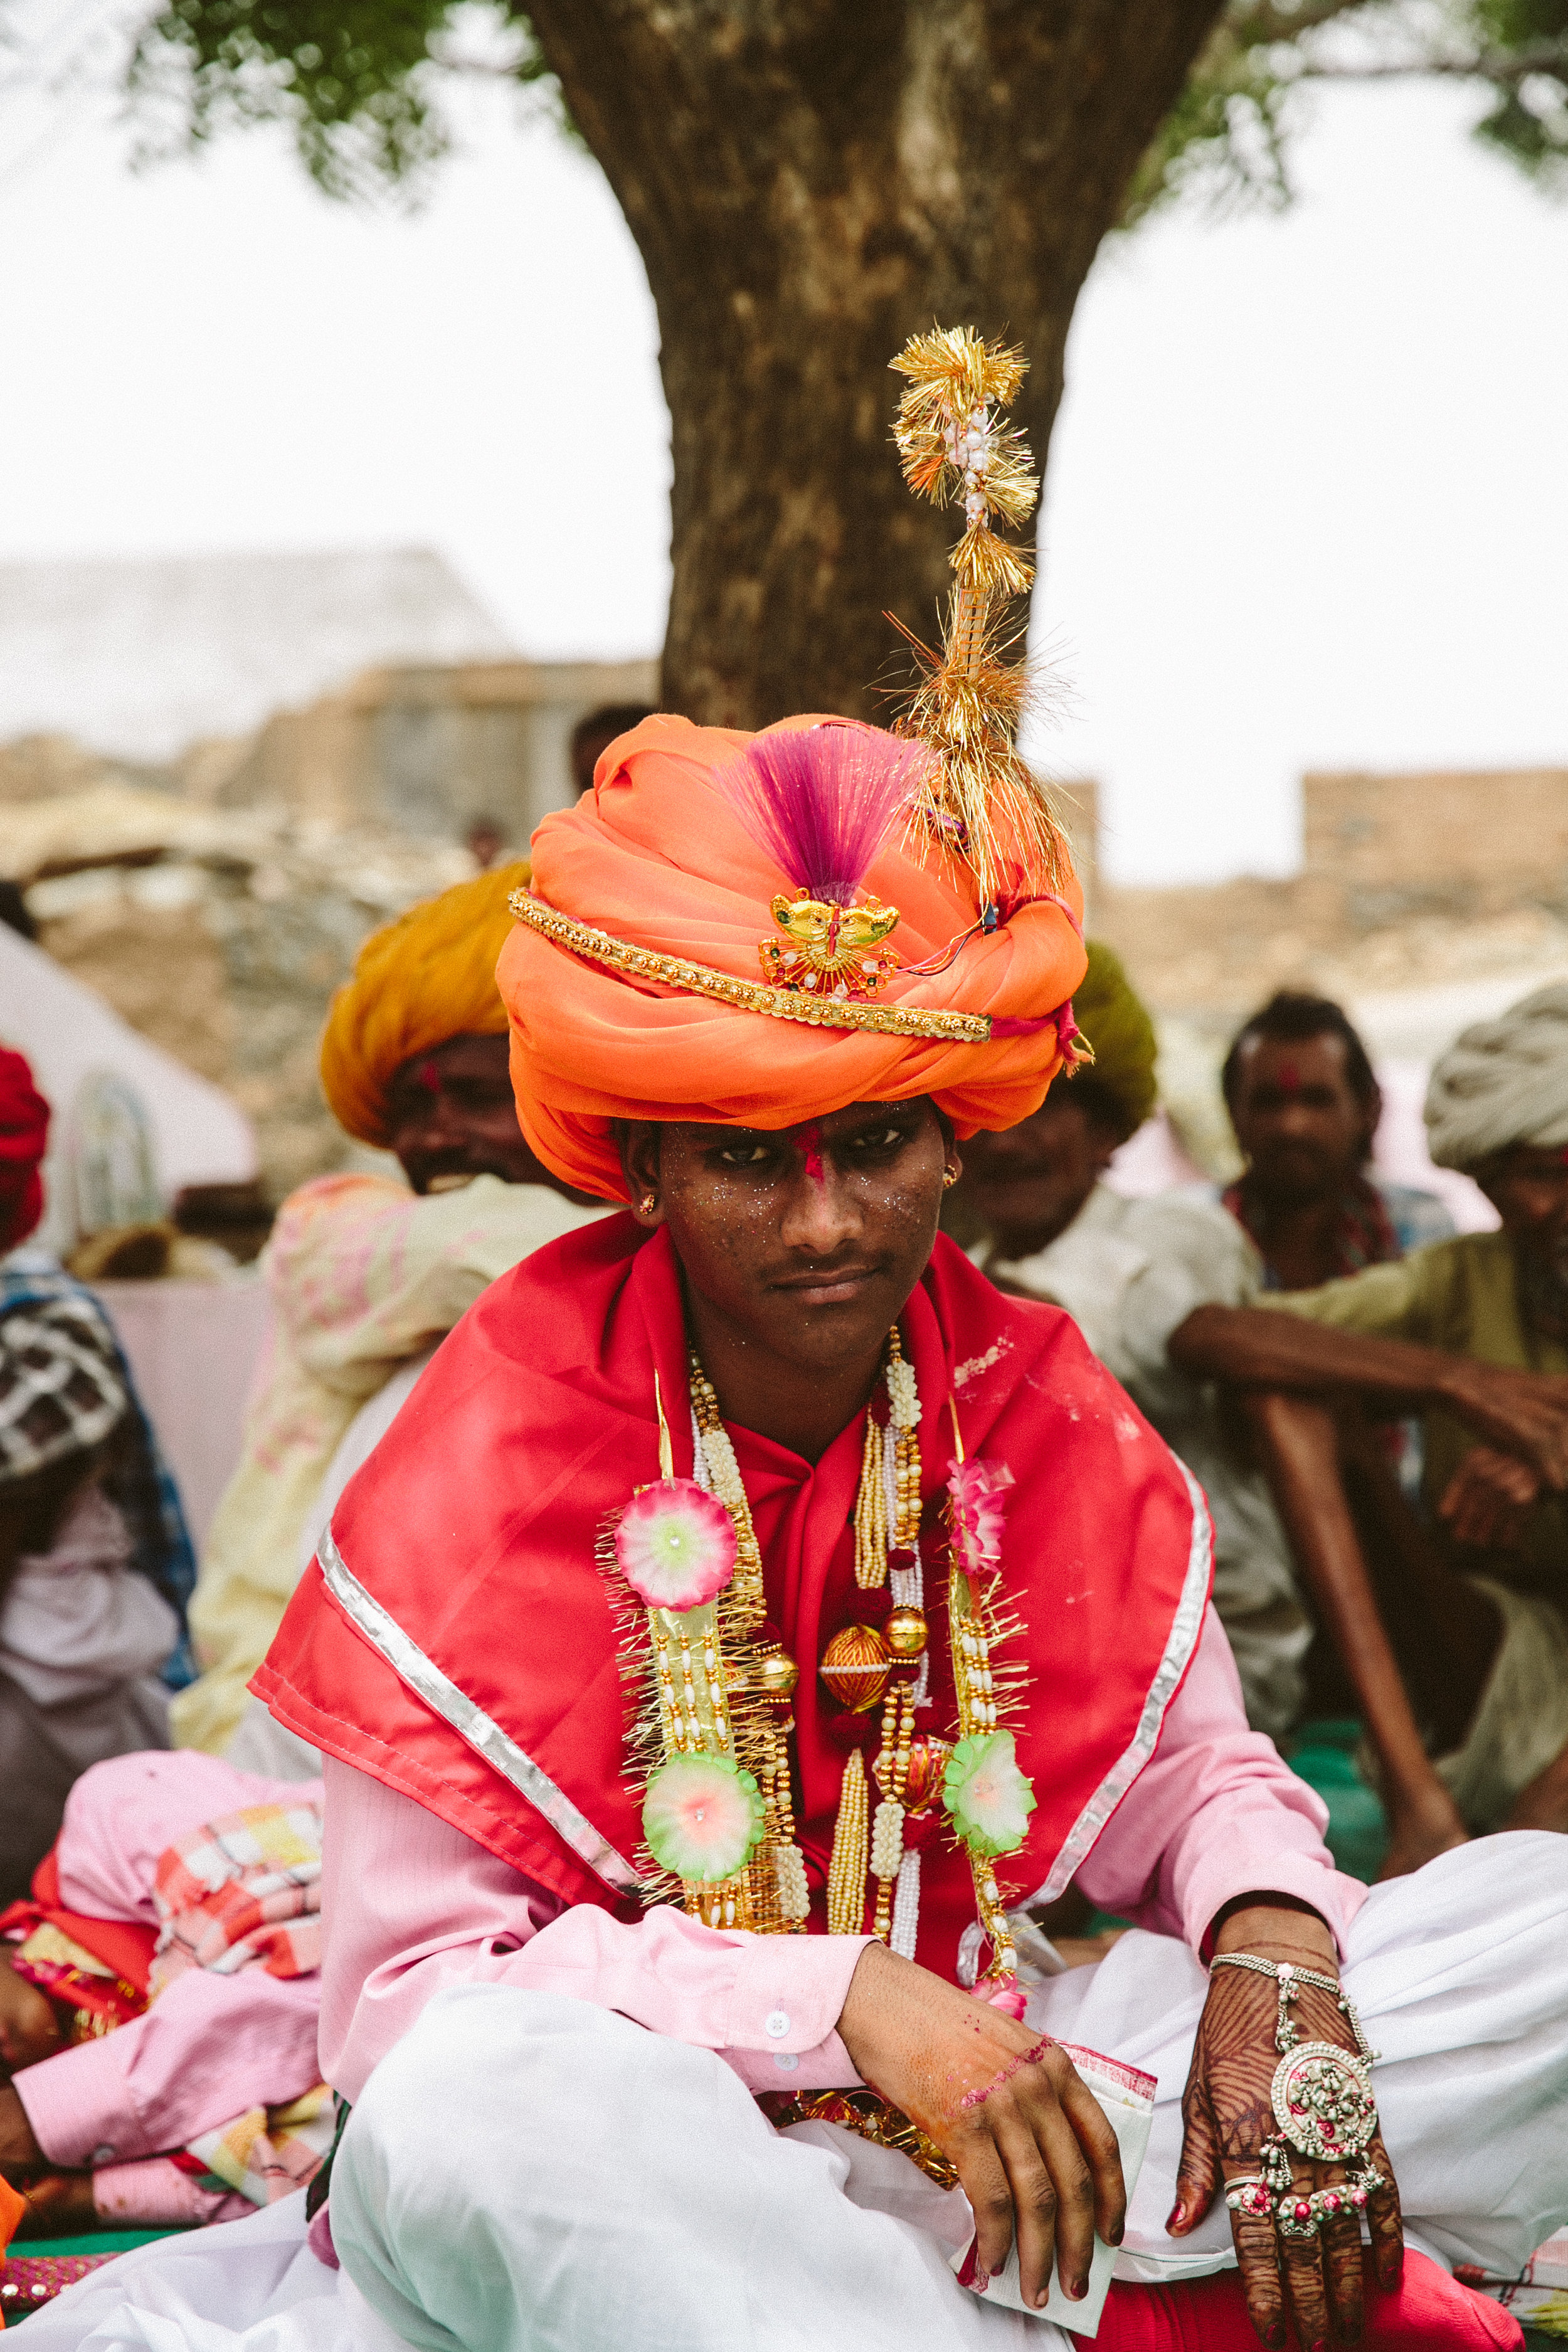  Rajasthan, India 2015 